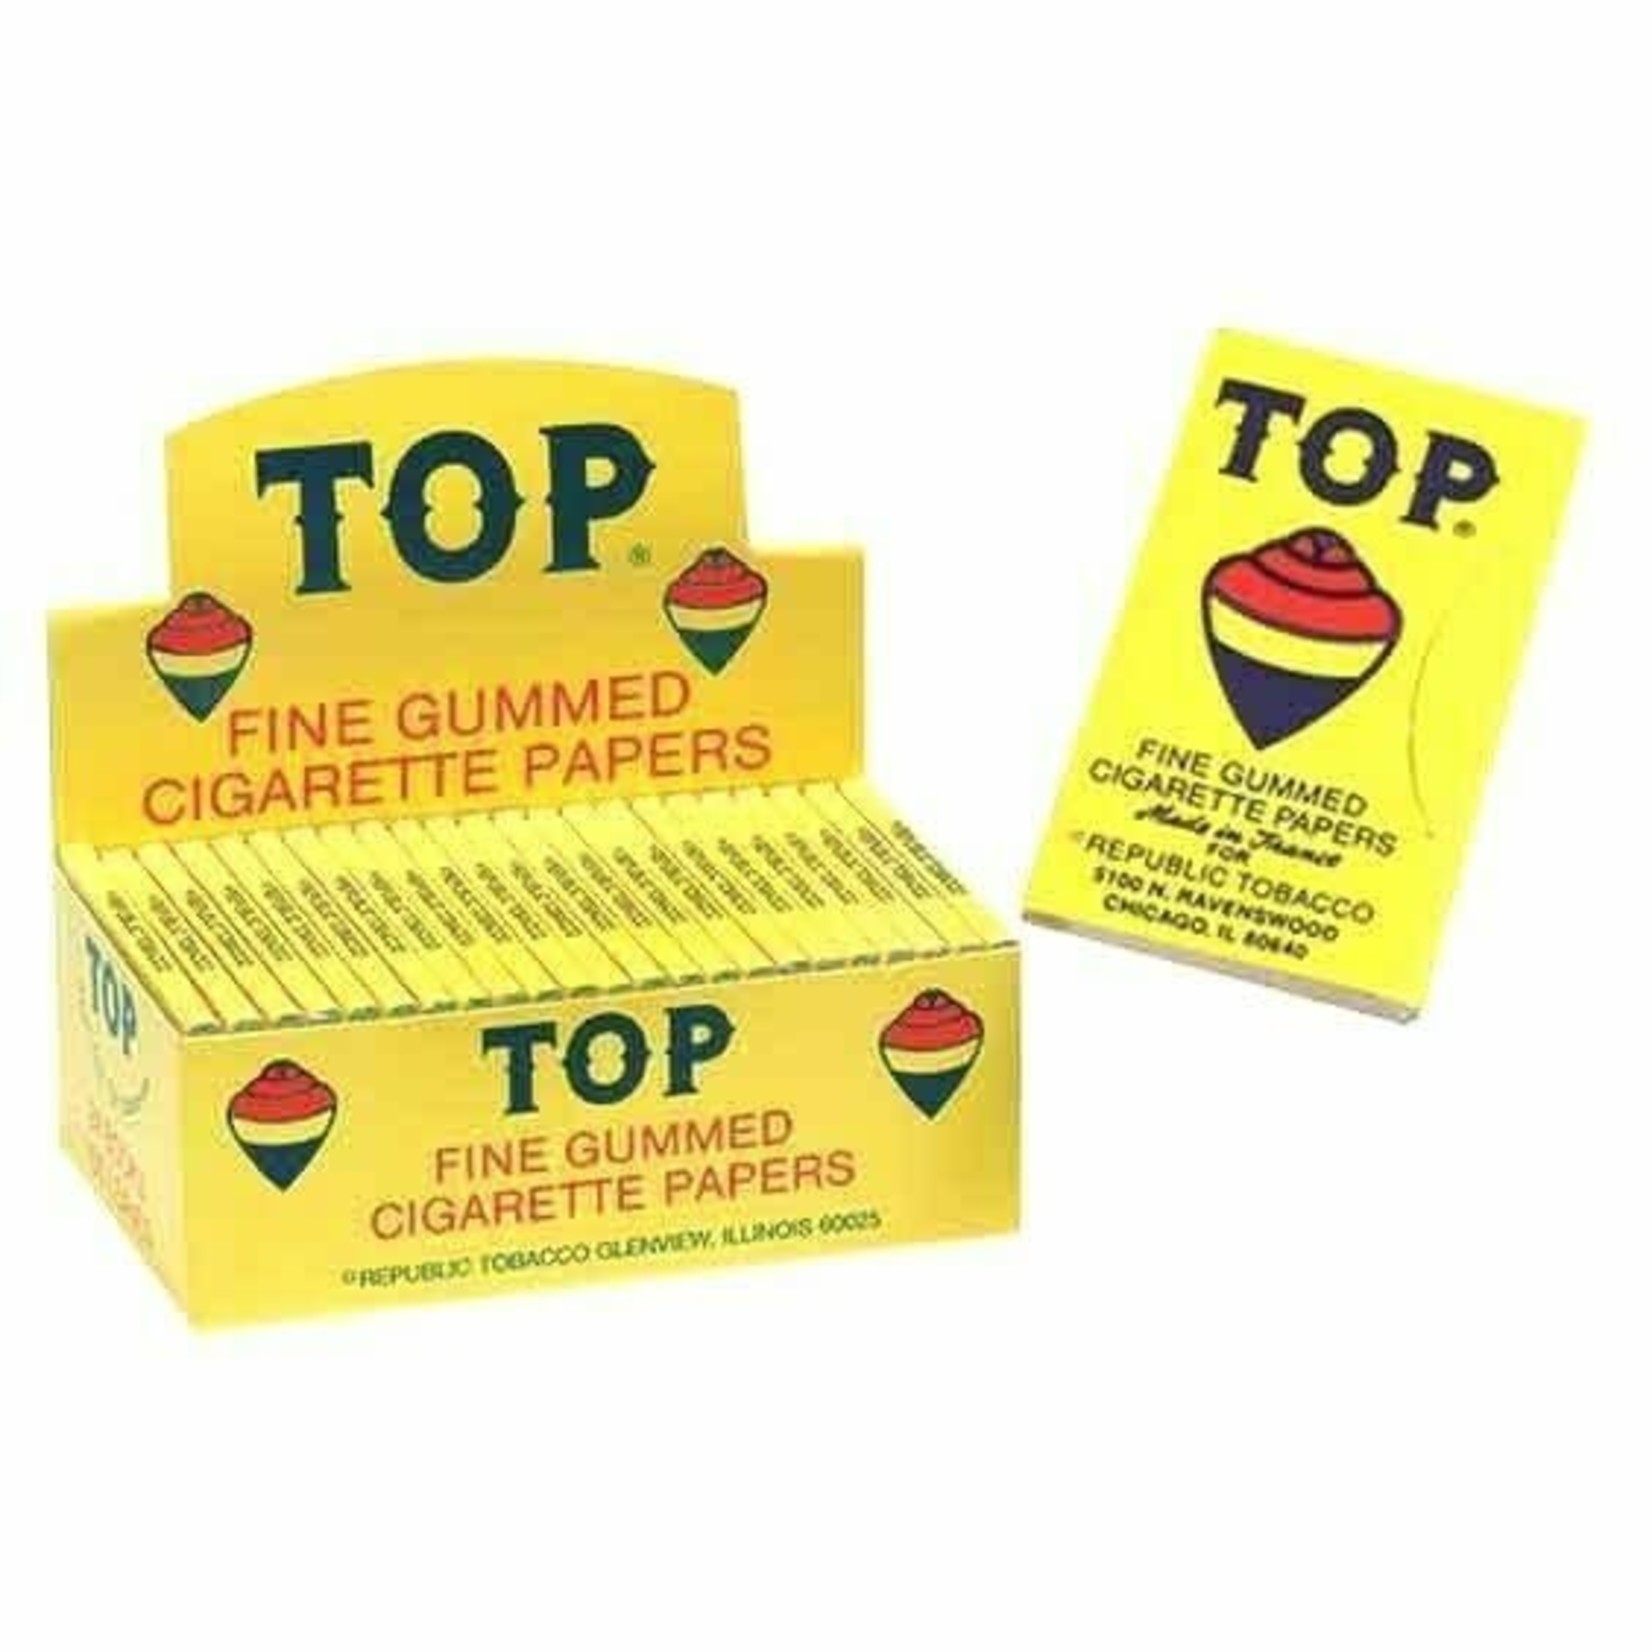 TOP TOP Fine Gummed Cigarette Rolling Papers - Single Wide